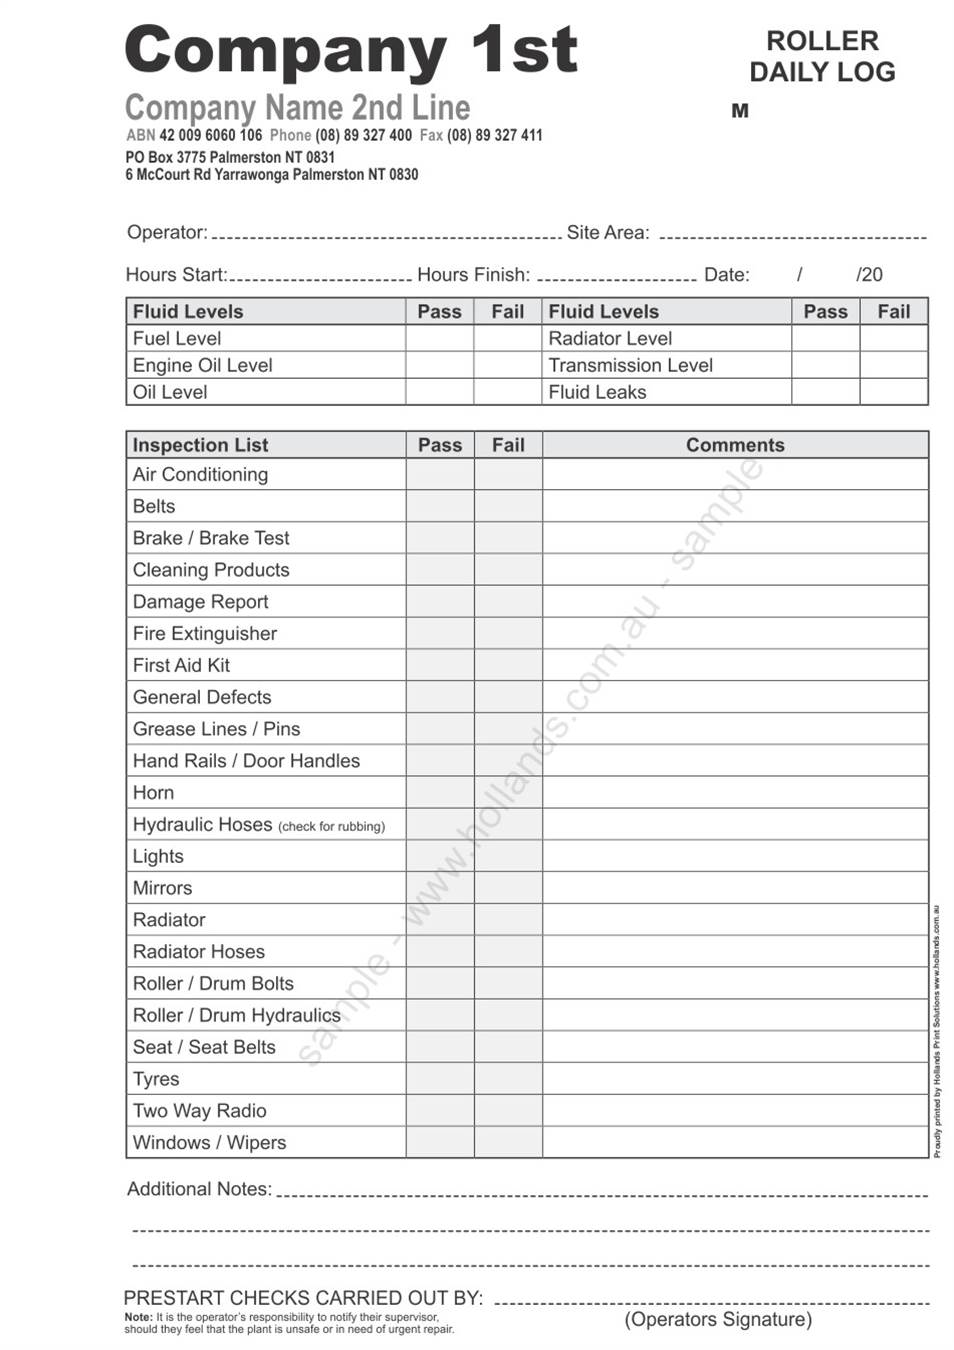 roller pre start checklist: Roller Daily Log Book